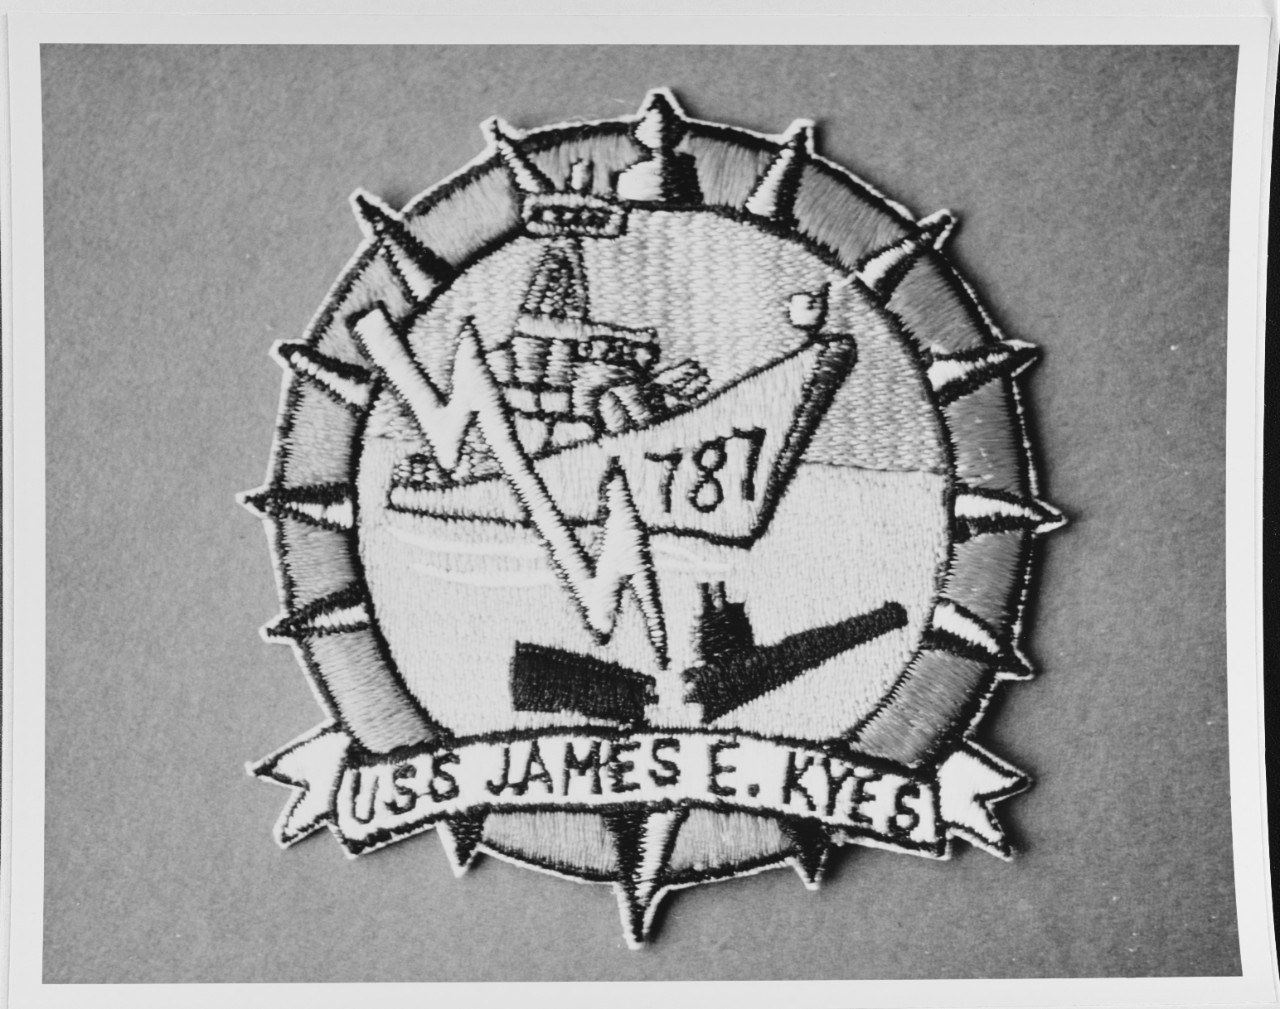 Insignia: USS James E. KYES (DD-787)